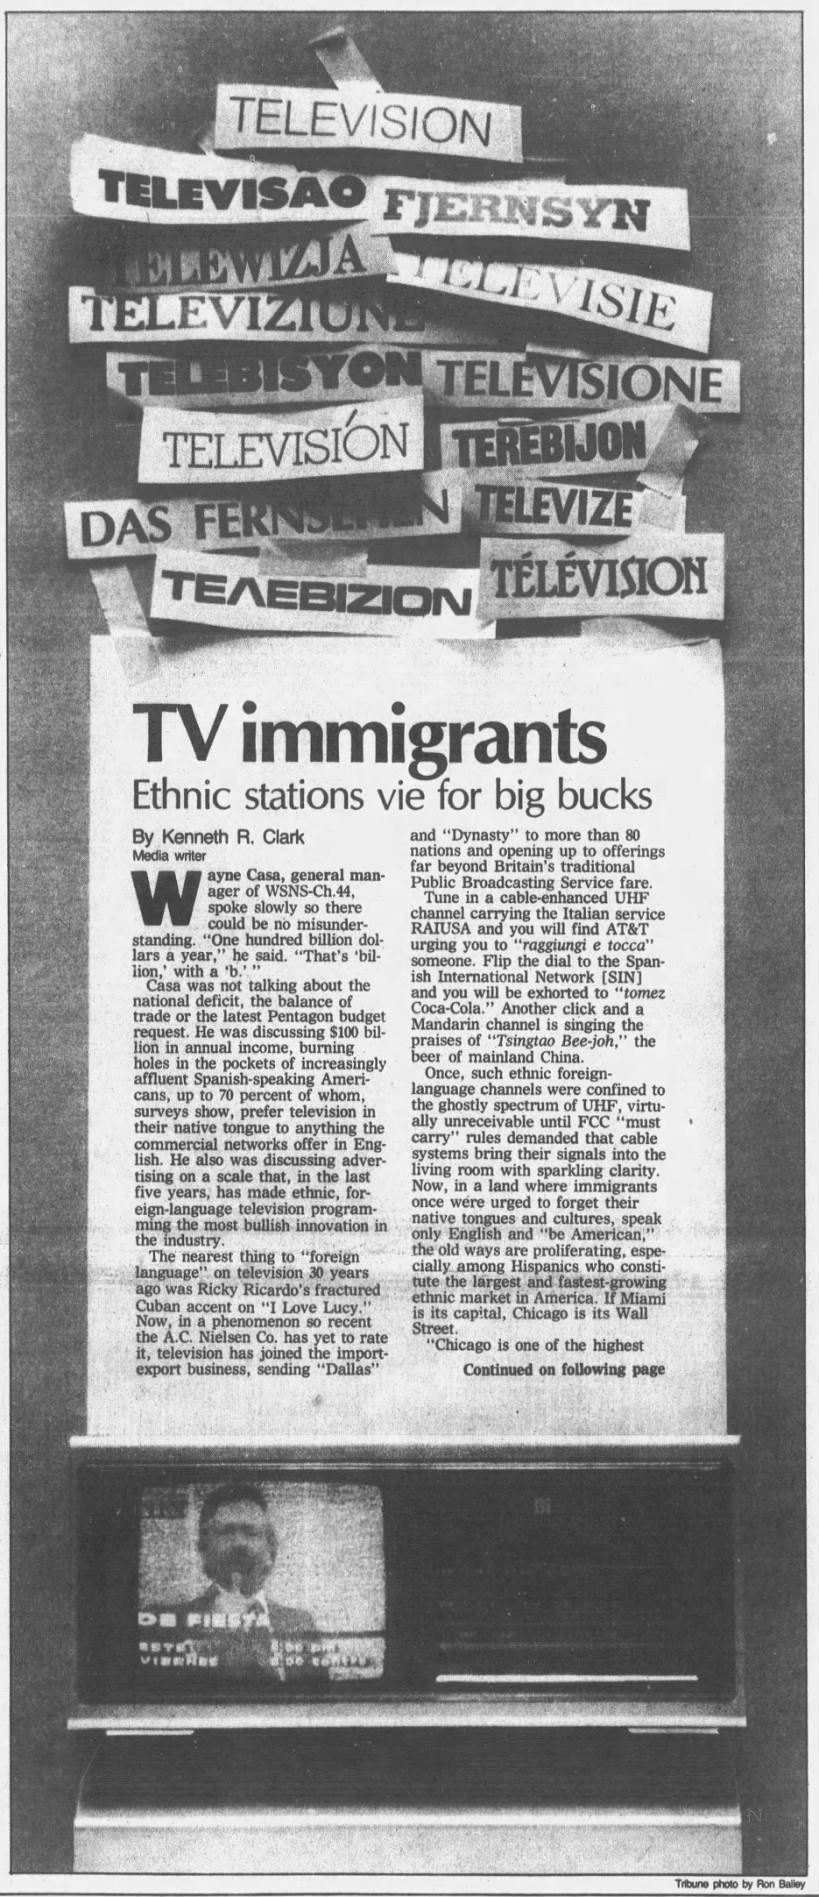 TV immigrants